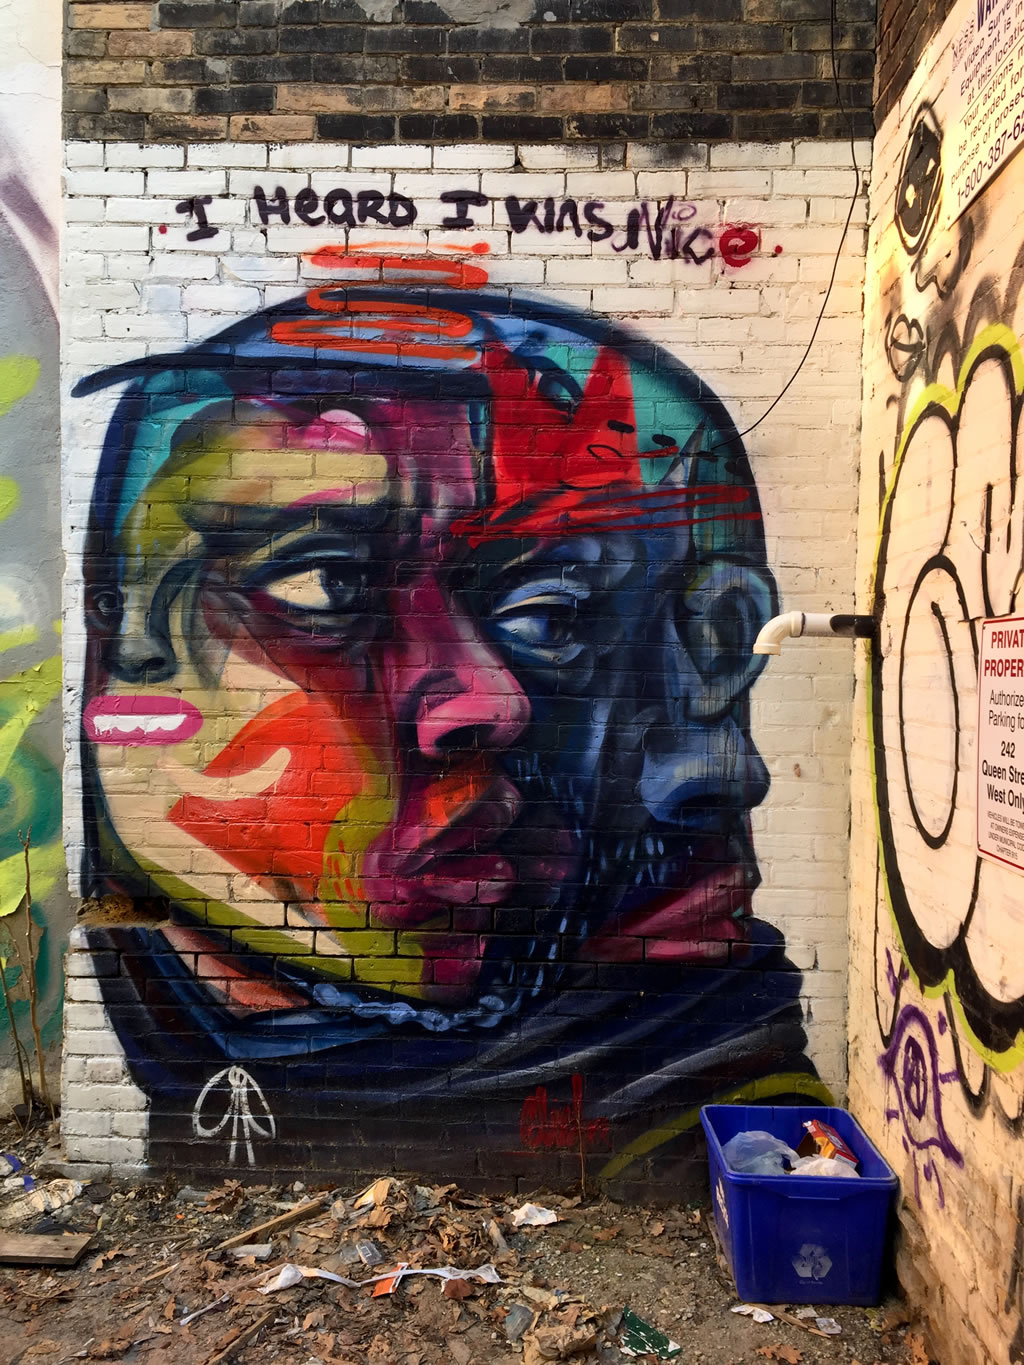 Toronto Graffiti Street Art | Munny Gallery Exhibit by Local Artists